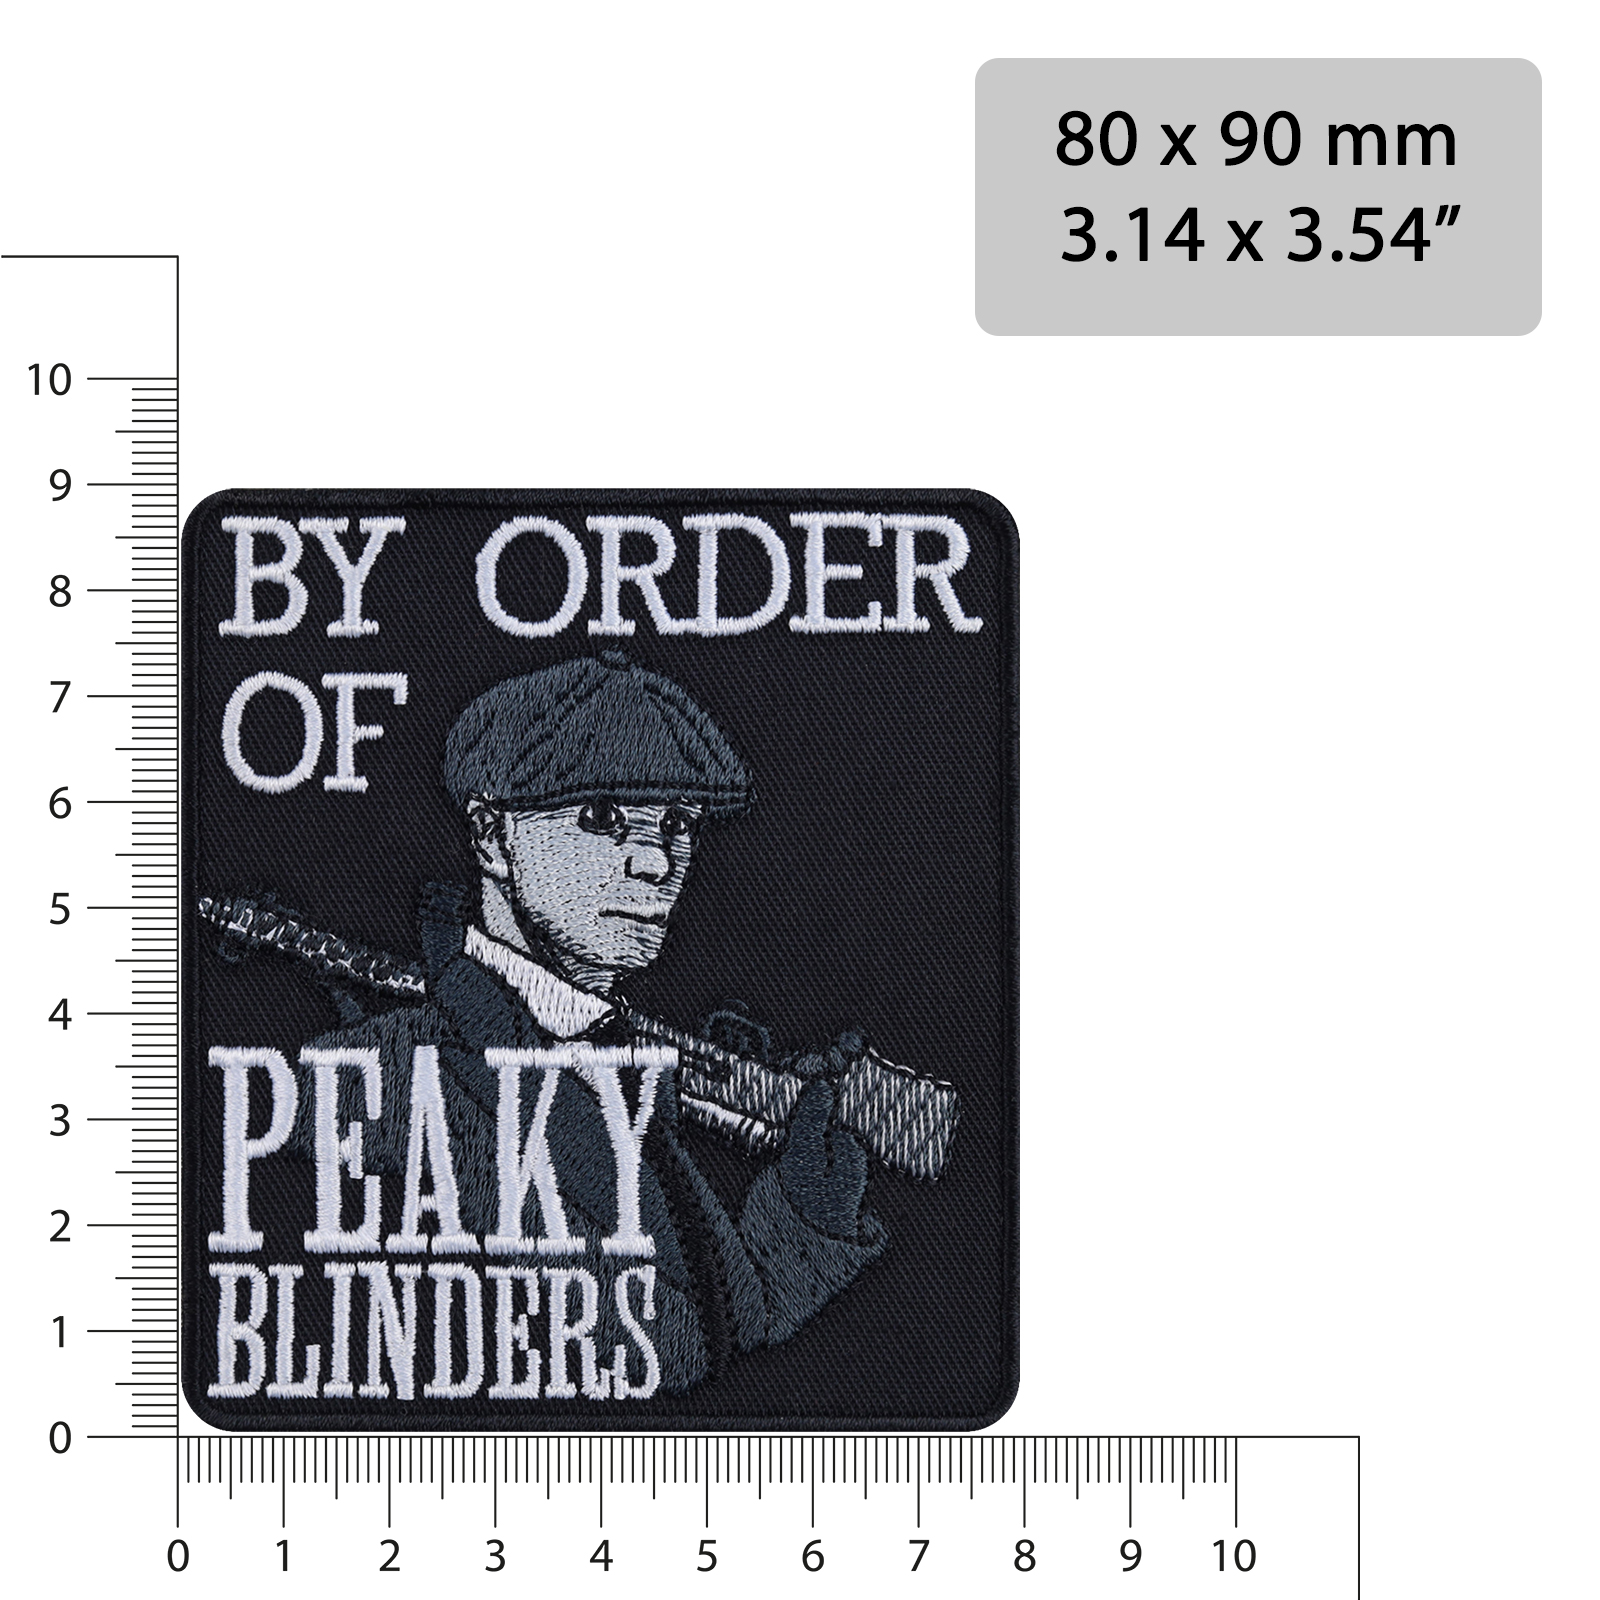 By order of peaky blinders - Patch